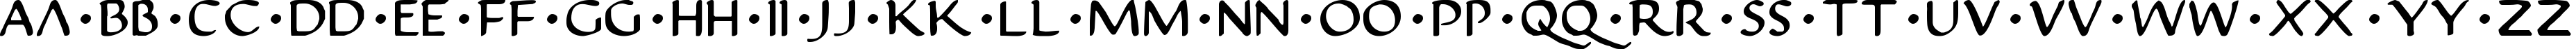 Пример написания английского алфавита шрифтом Justinian 2